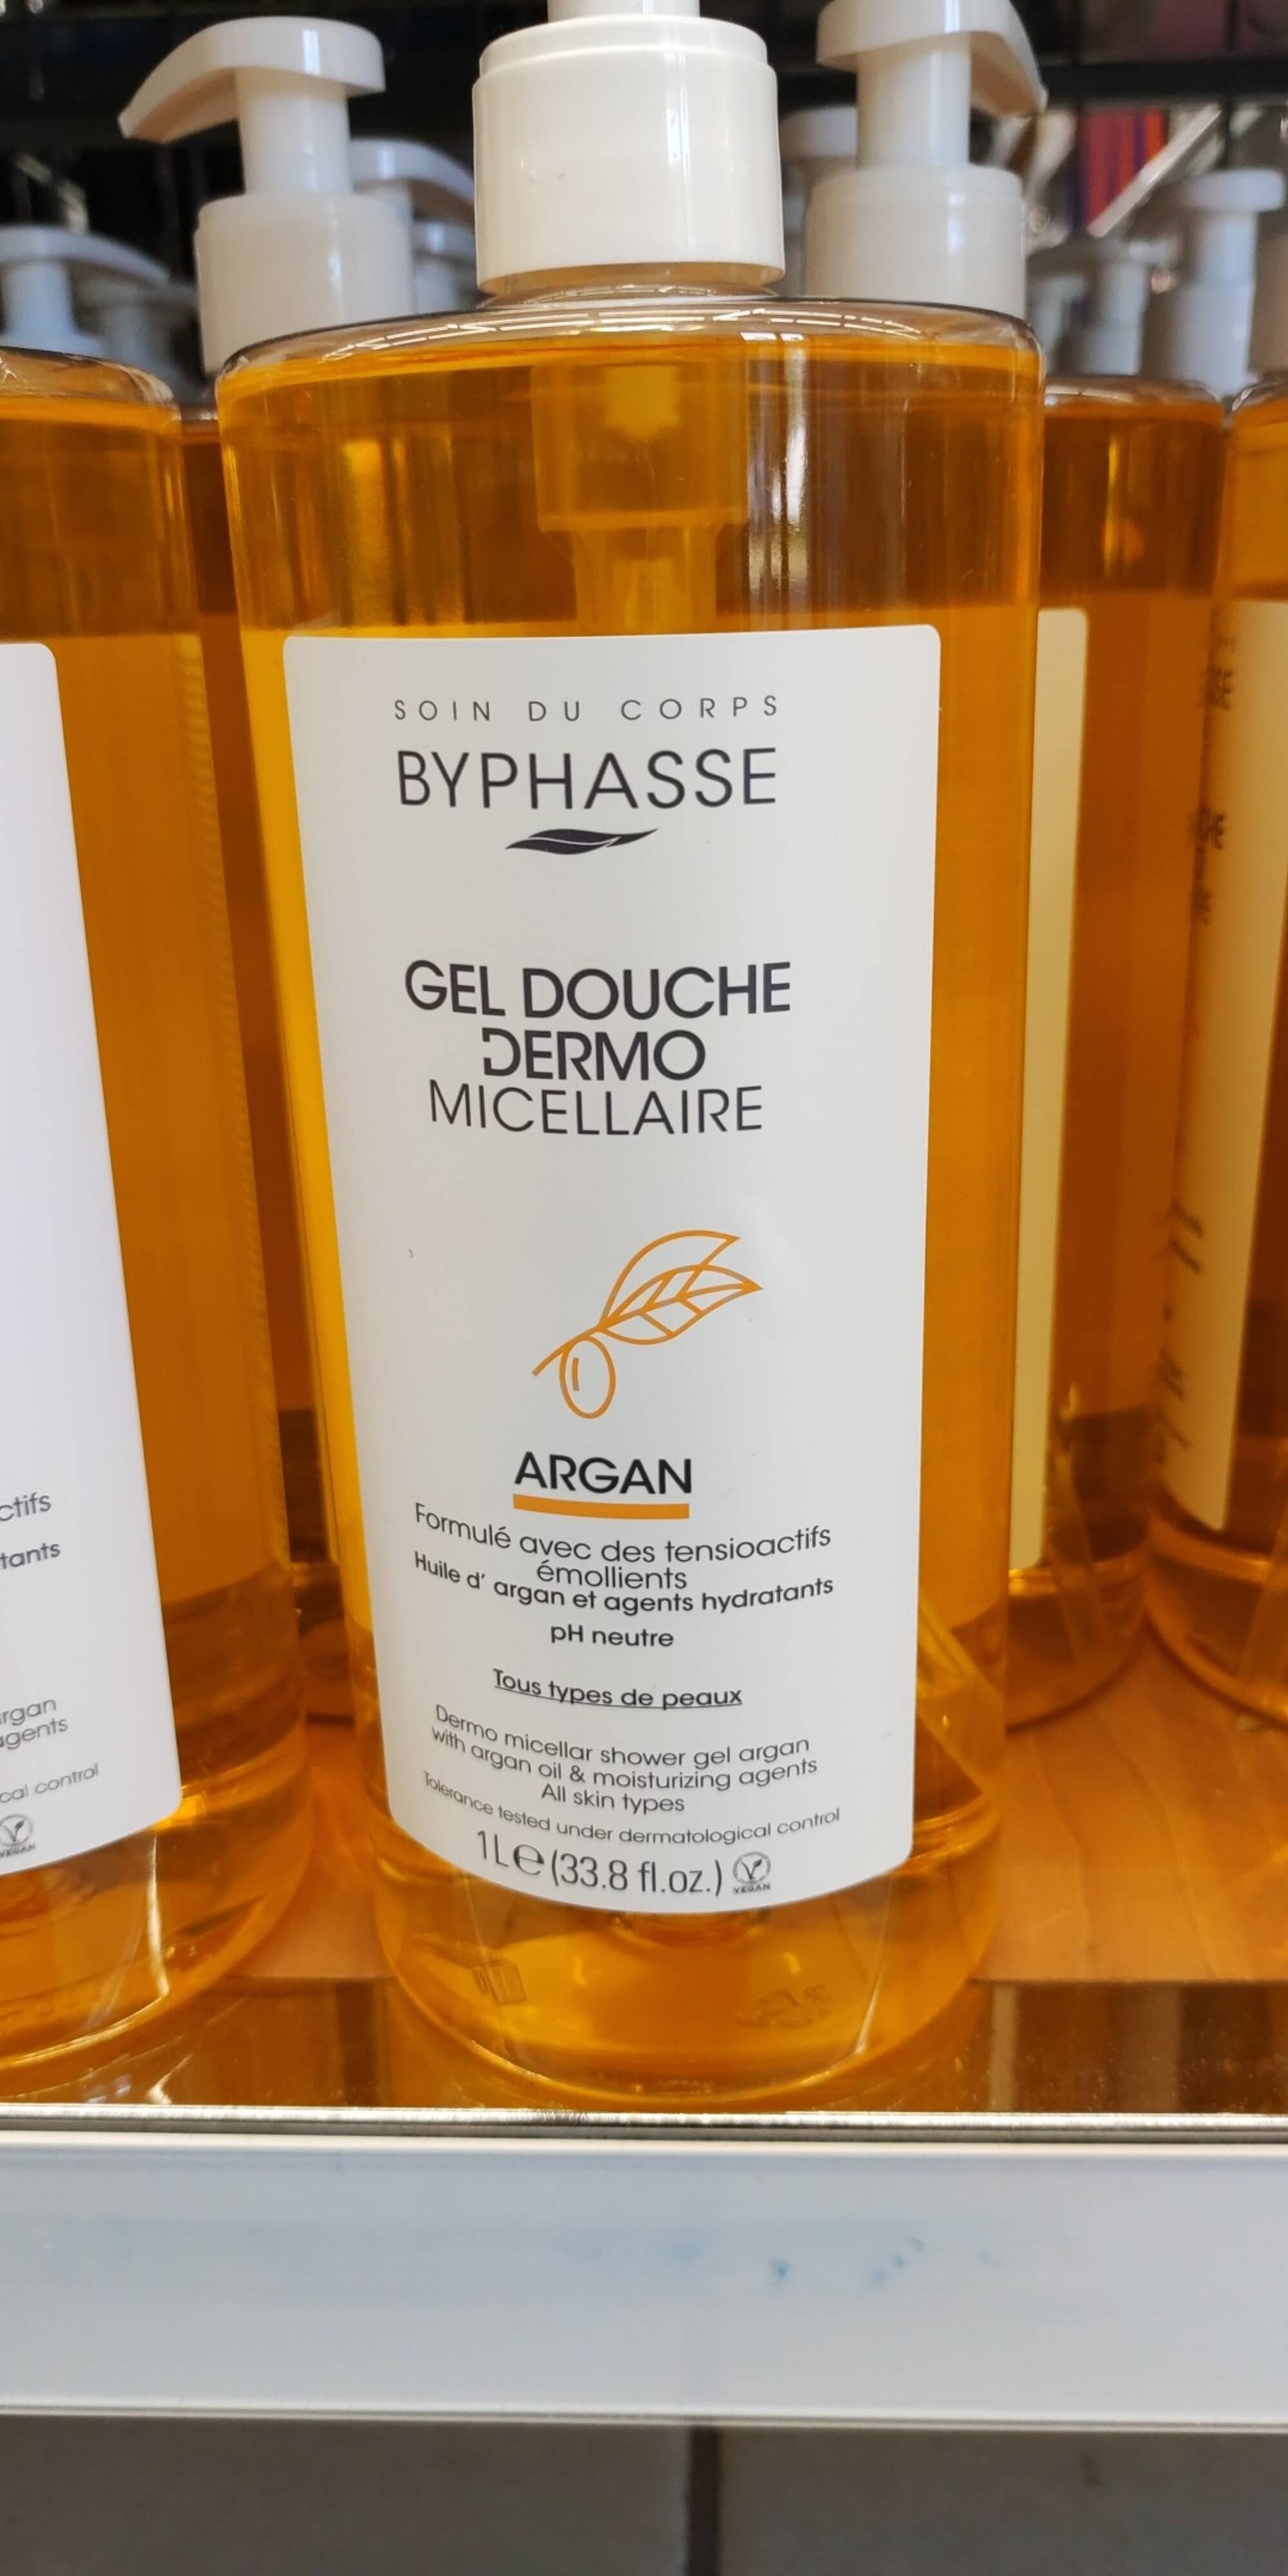 BYPHASSE - Argan - Gel douche dermo micellaire